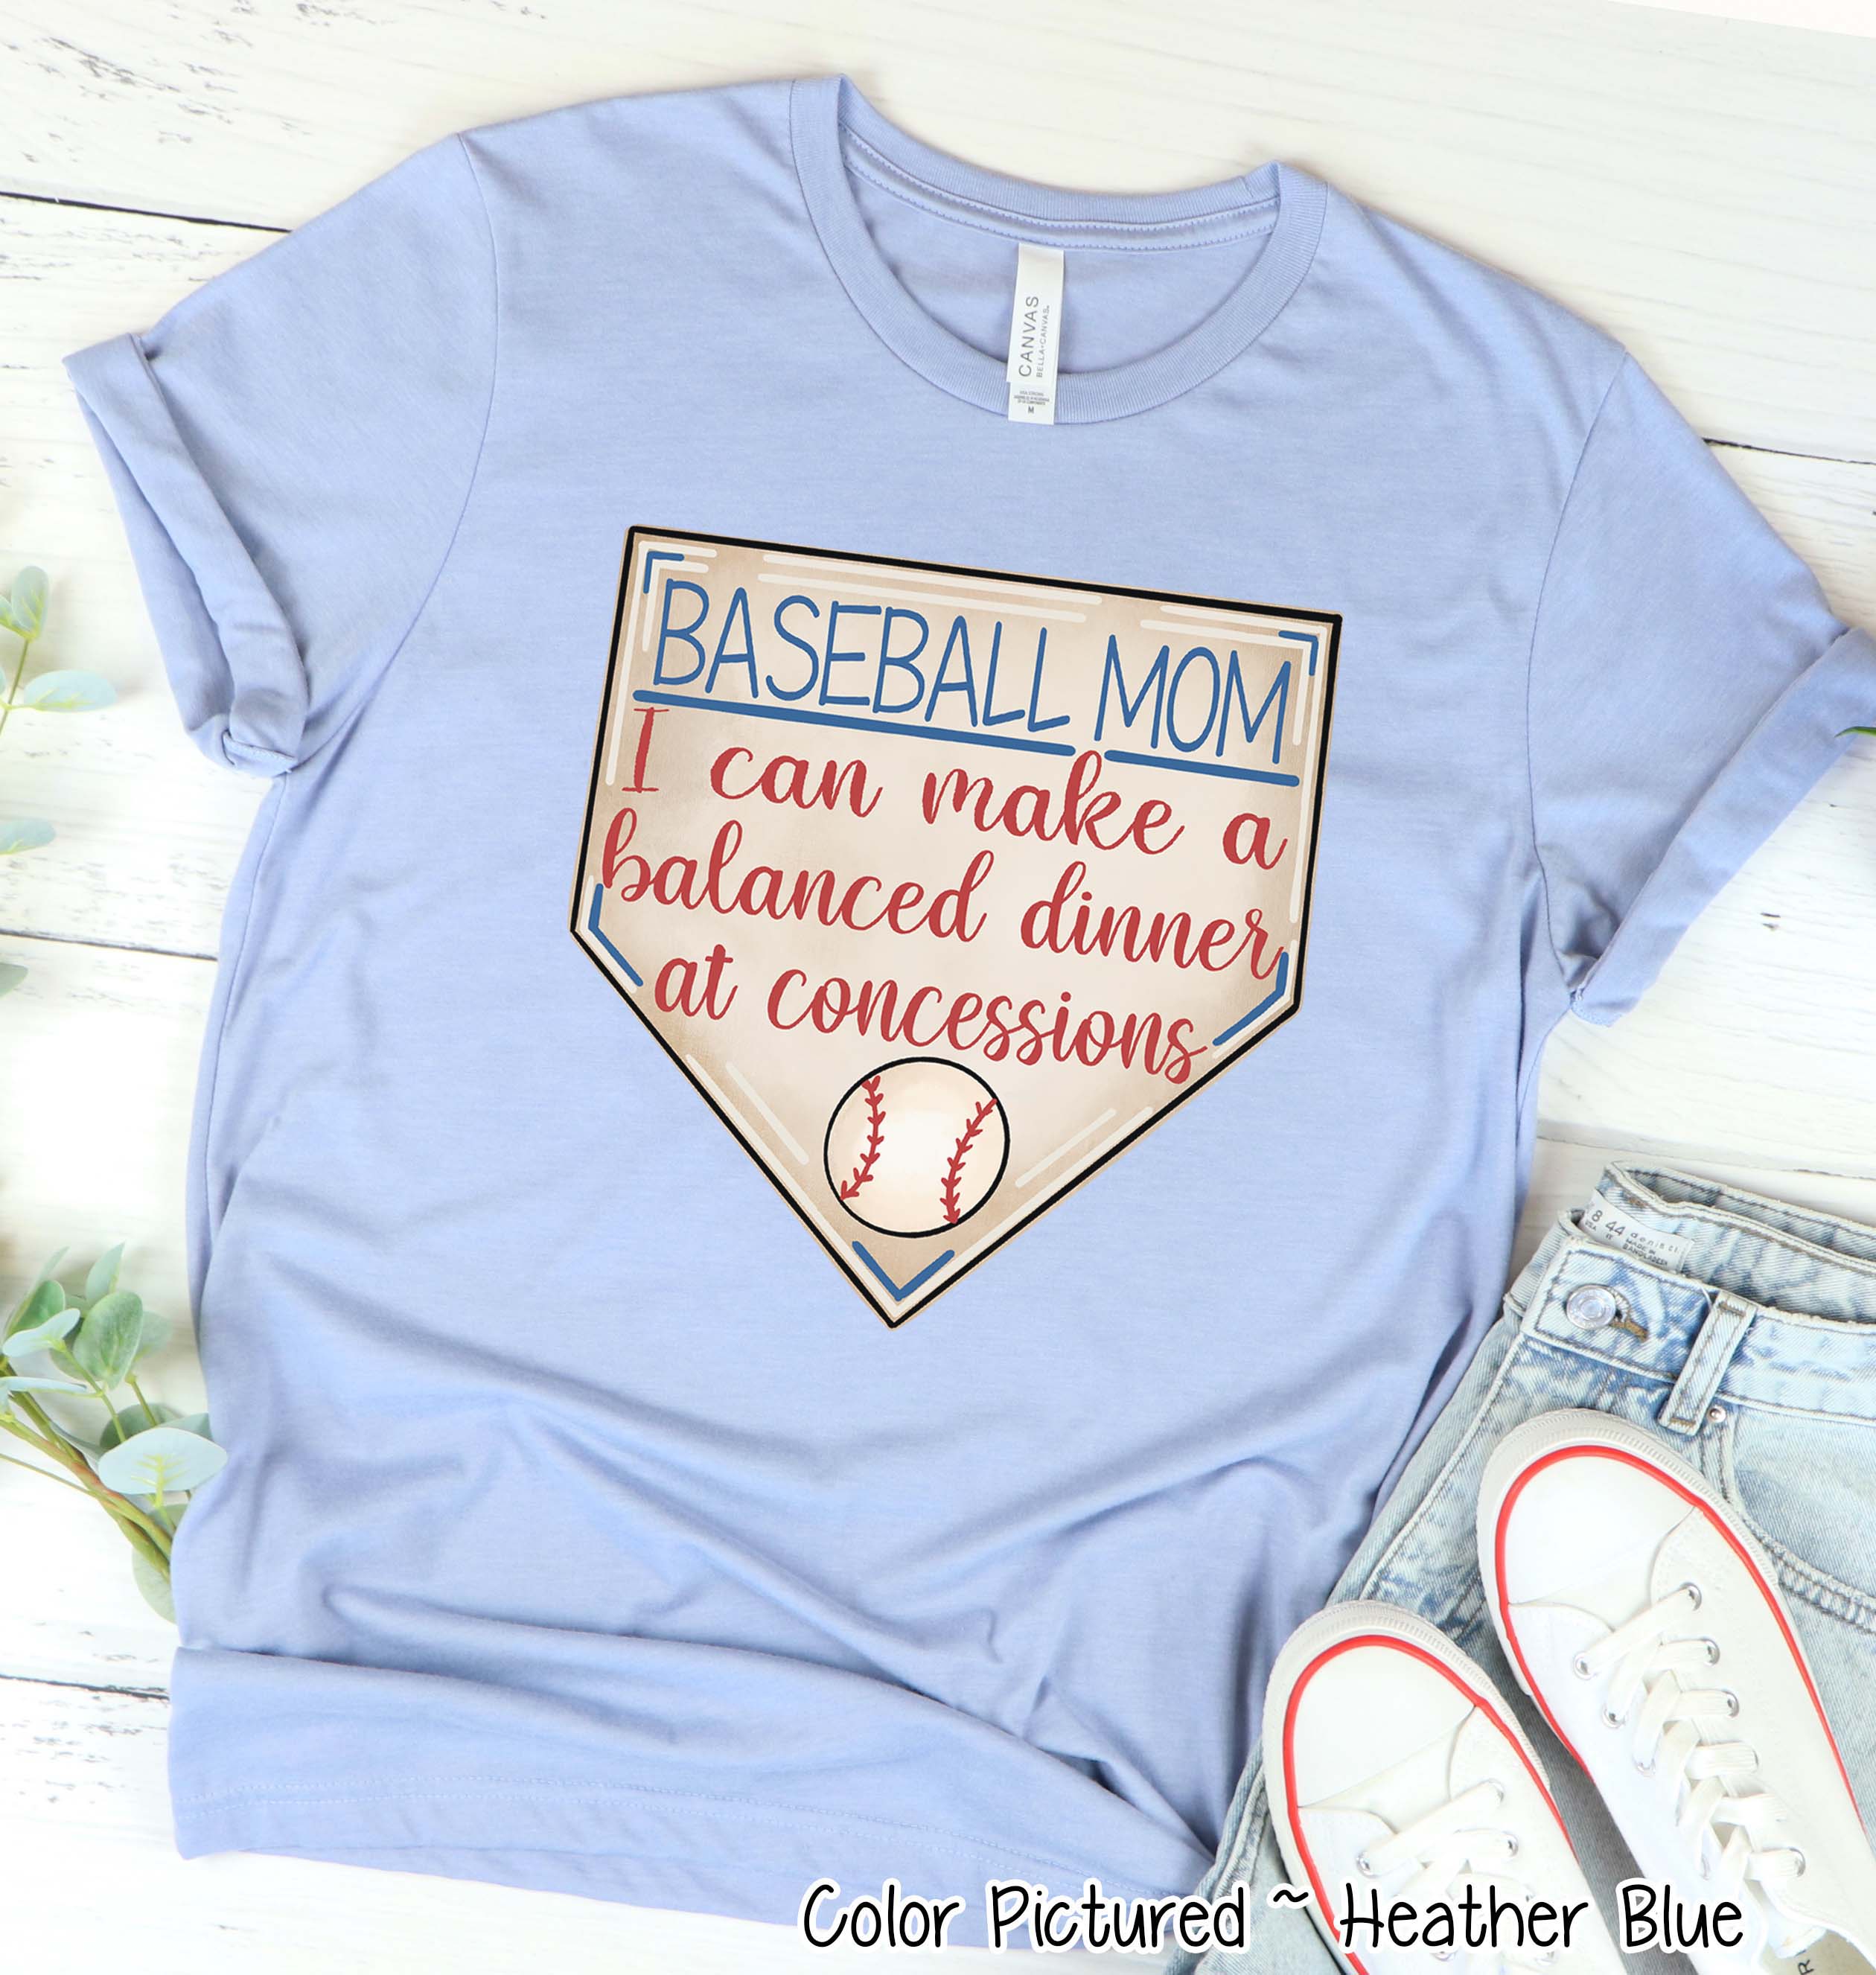 Baseball Mom I Can Make a Balanced Dinner at Concessions Tee